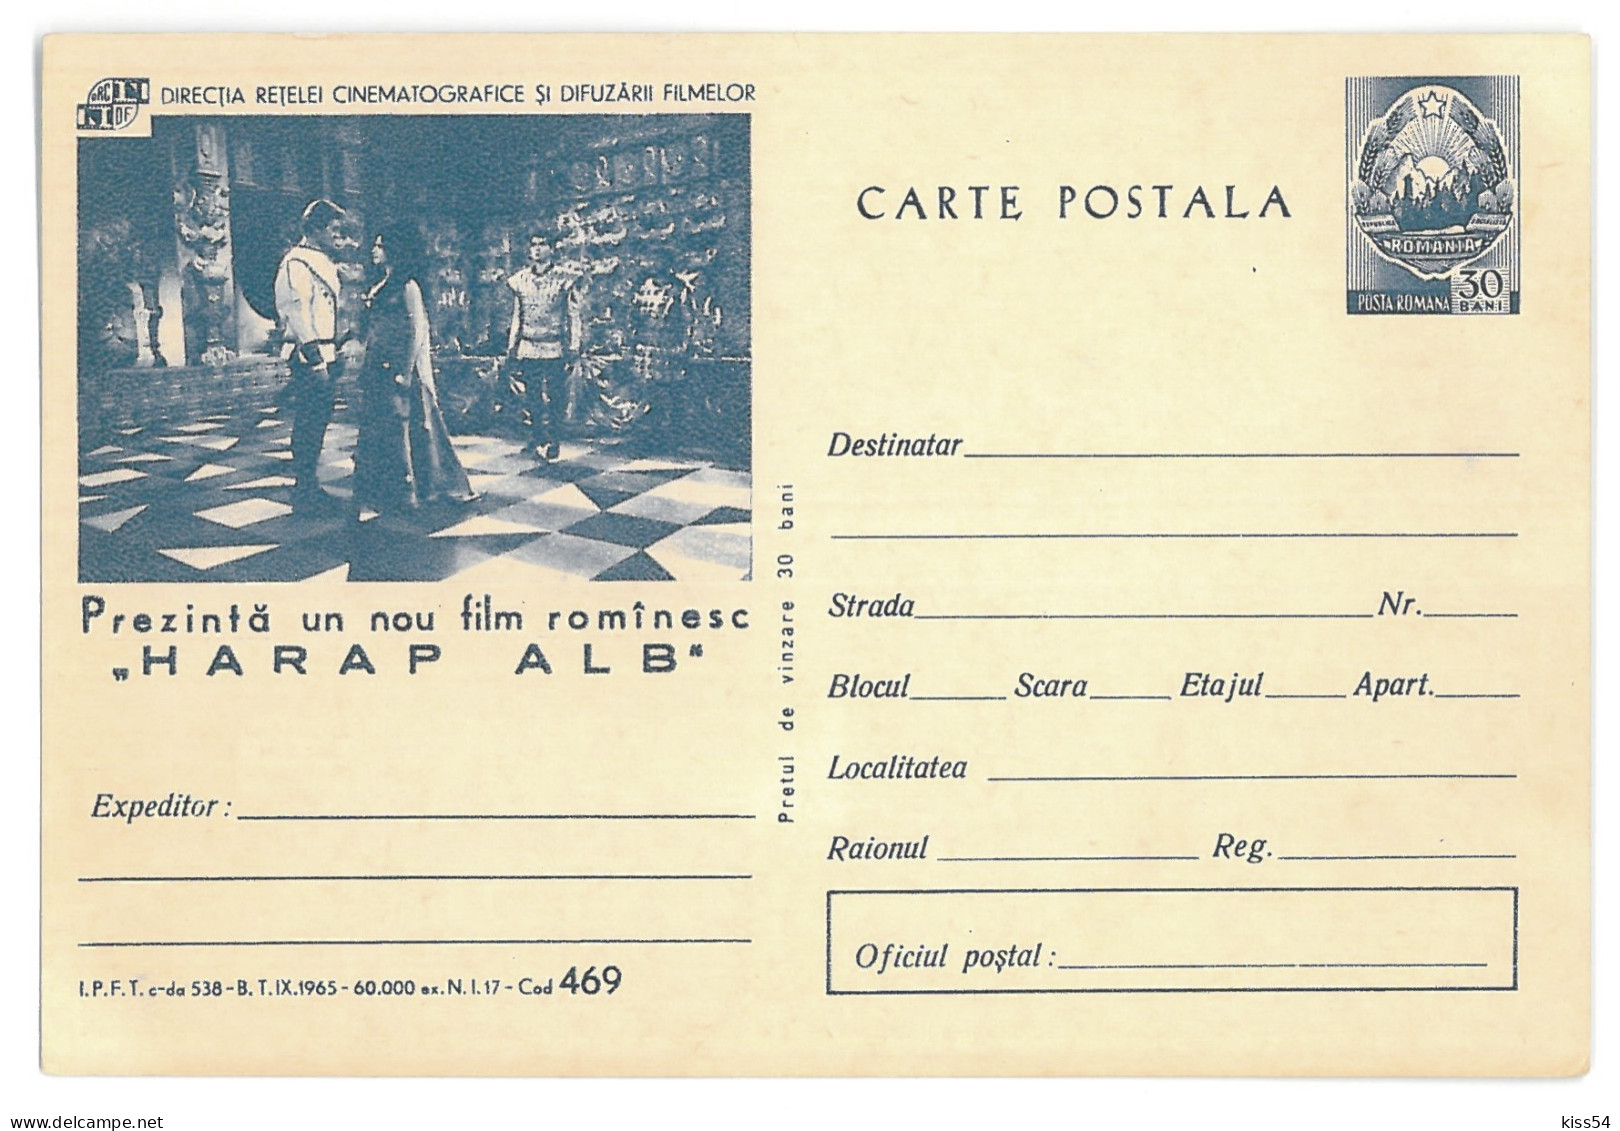 IP 65 A - 469 FILM, Harap Alb, Romania - Stationery - Unused - 1965 - Postal Stationery